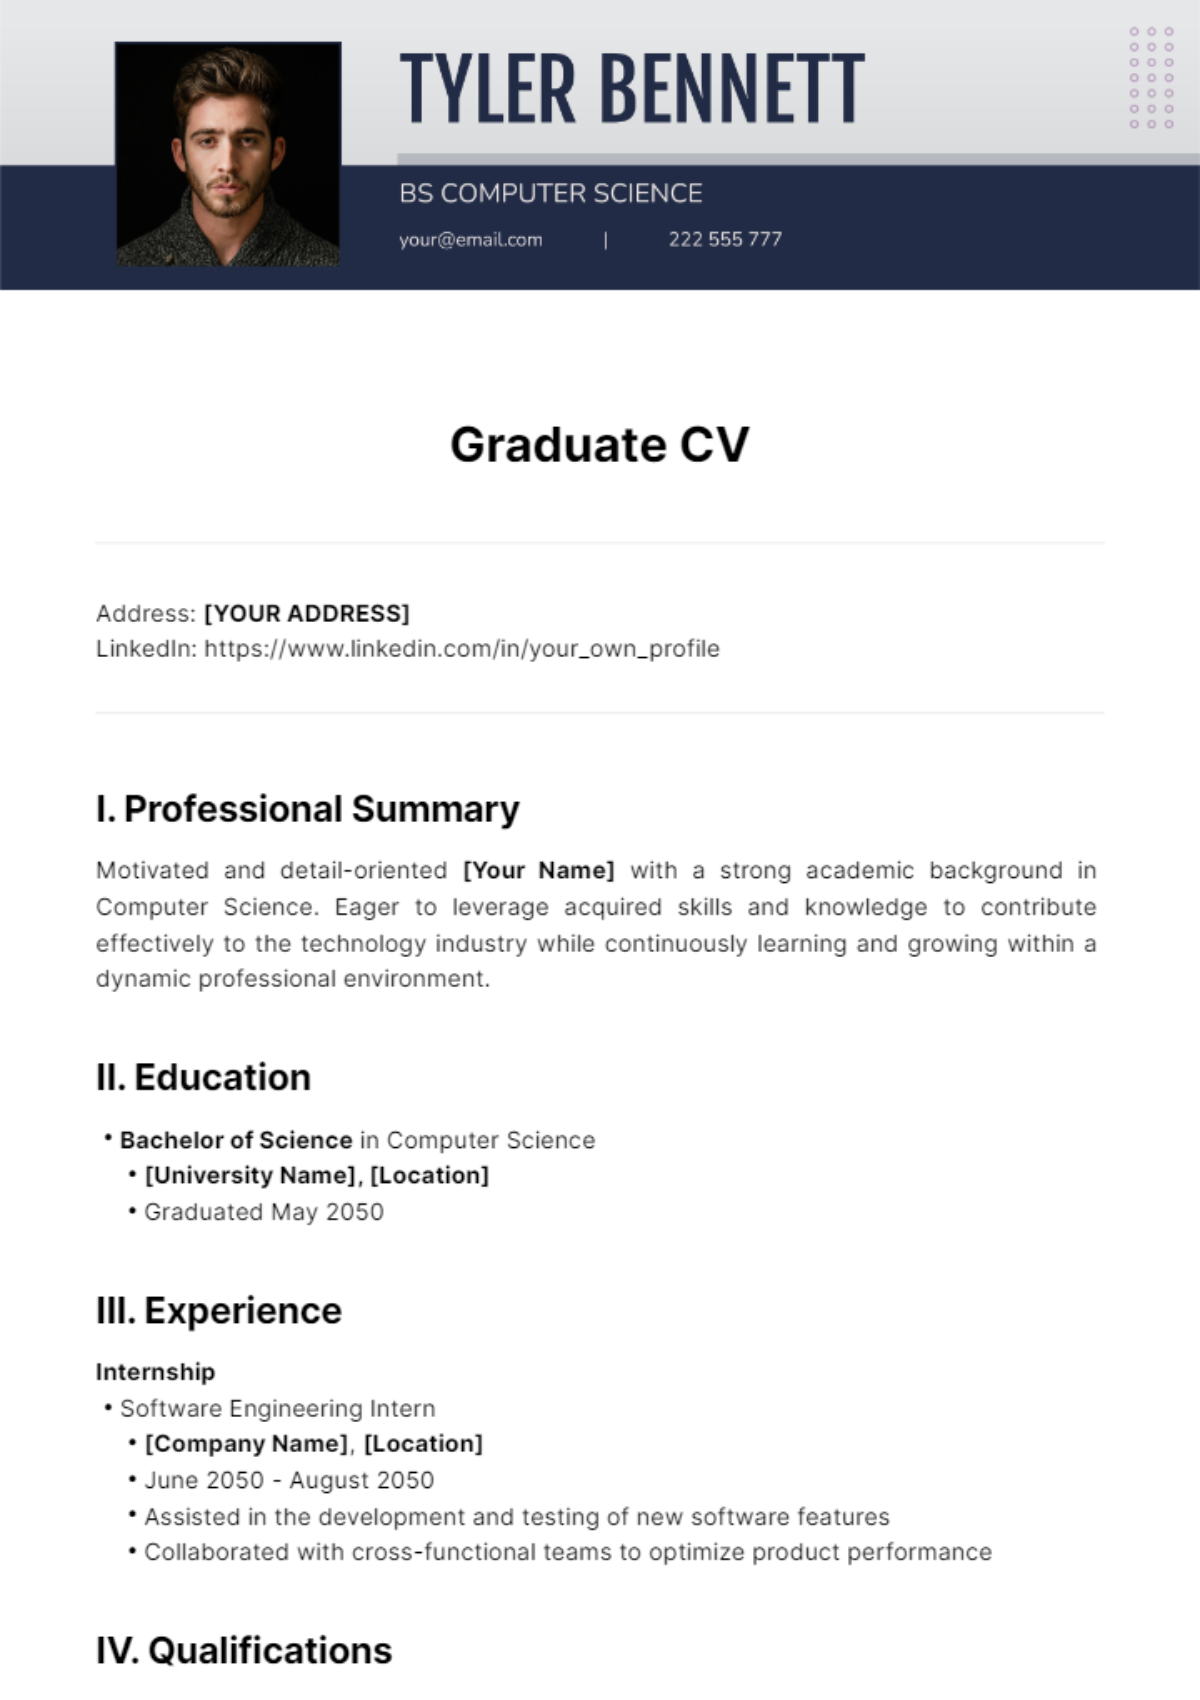 Free Graduate CV Template